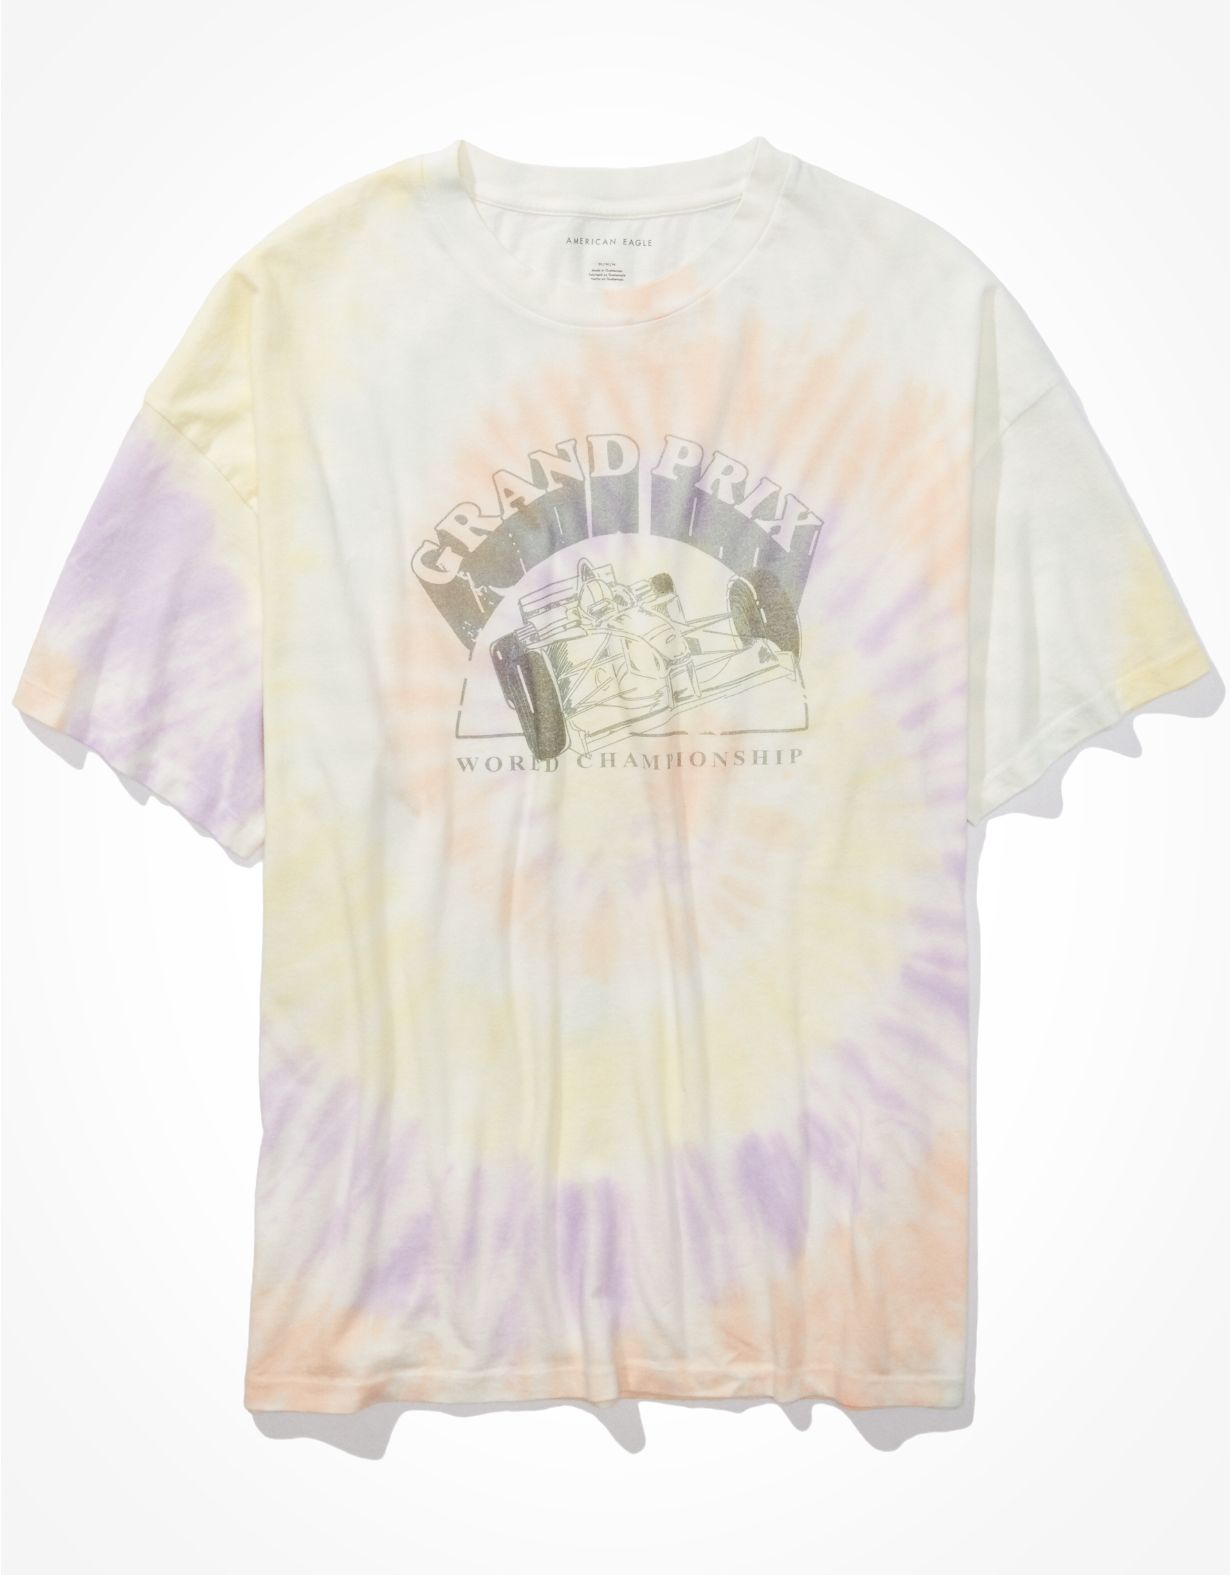 AE Oversized Tie Dye Graphic T-Shirt